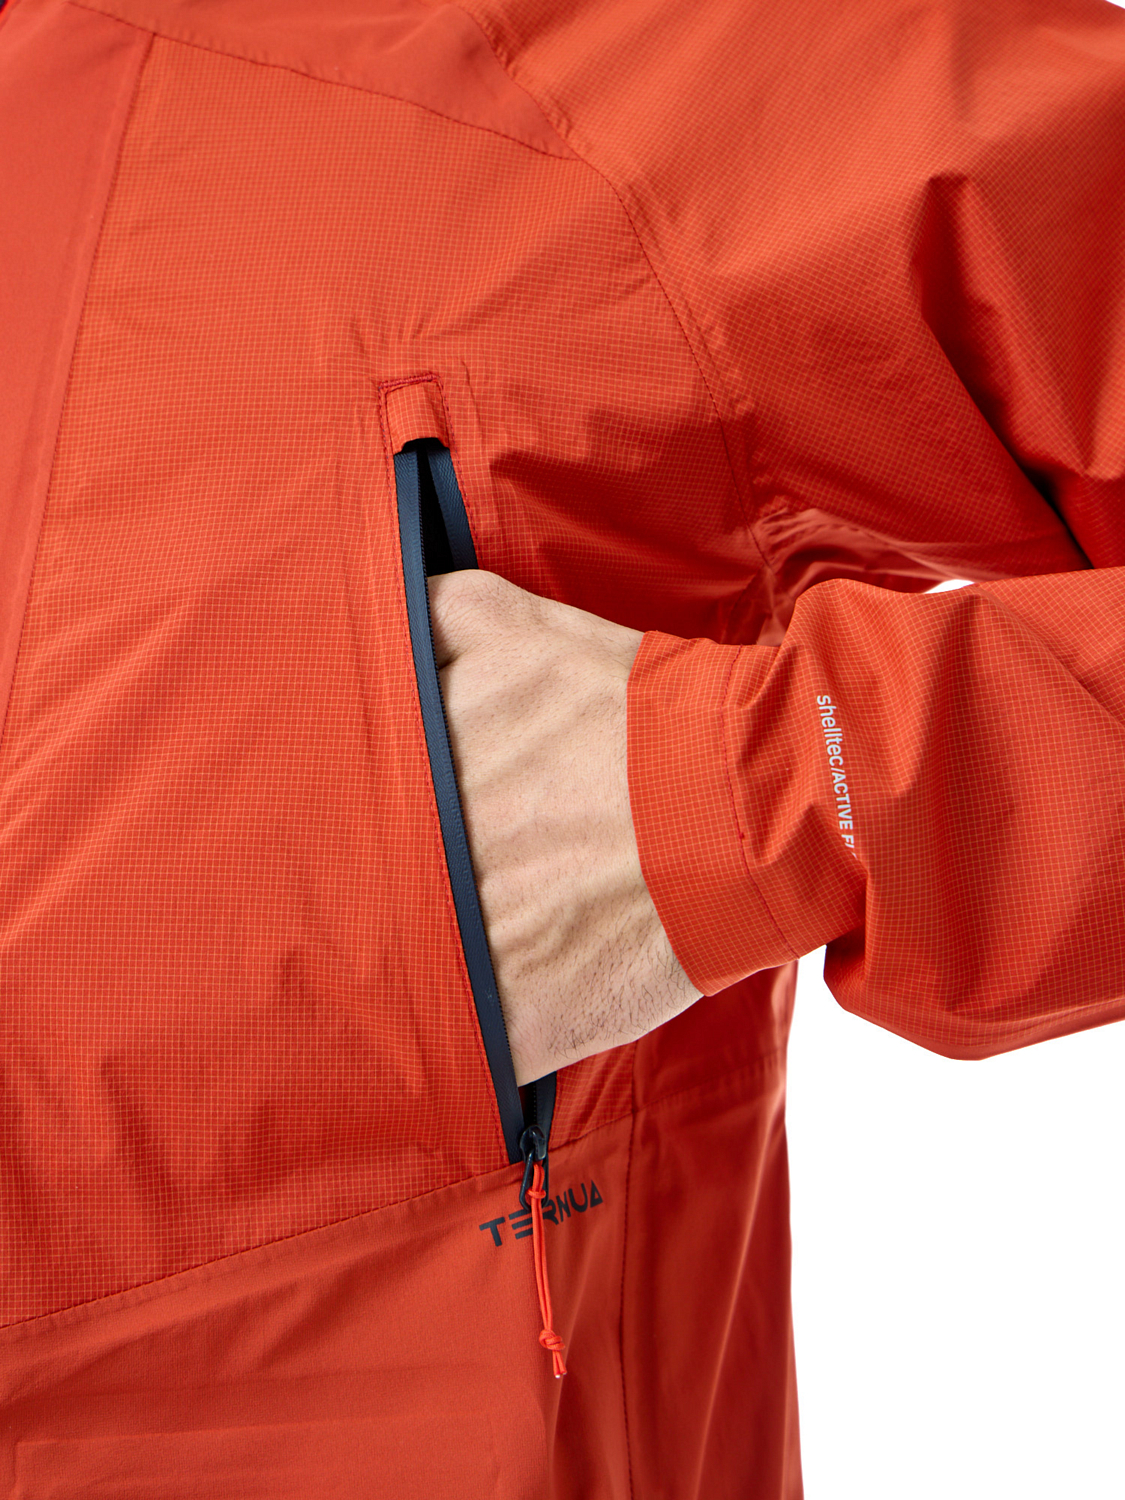 Куртка Ternua Kars Orange.Com